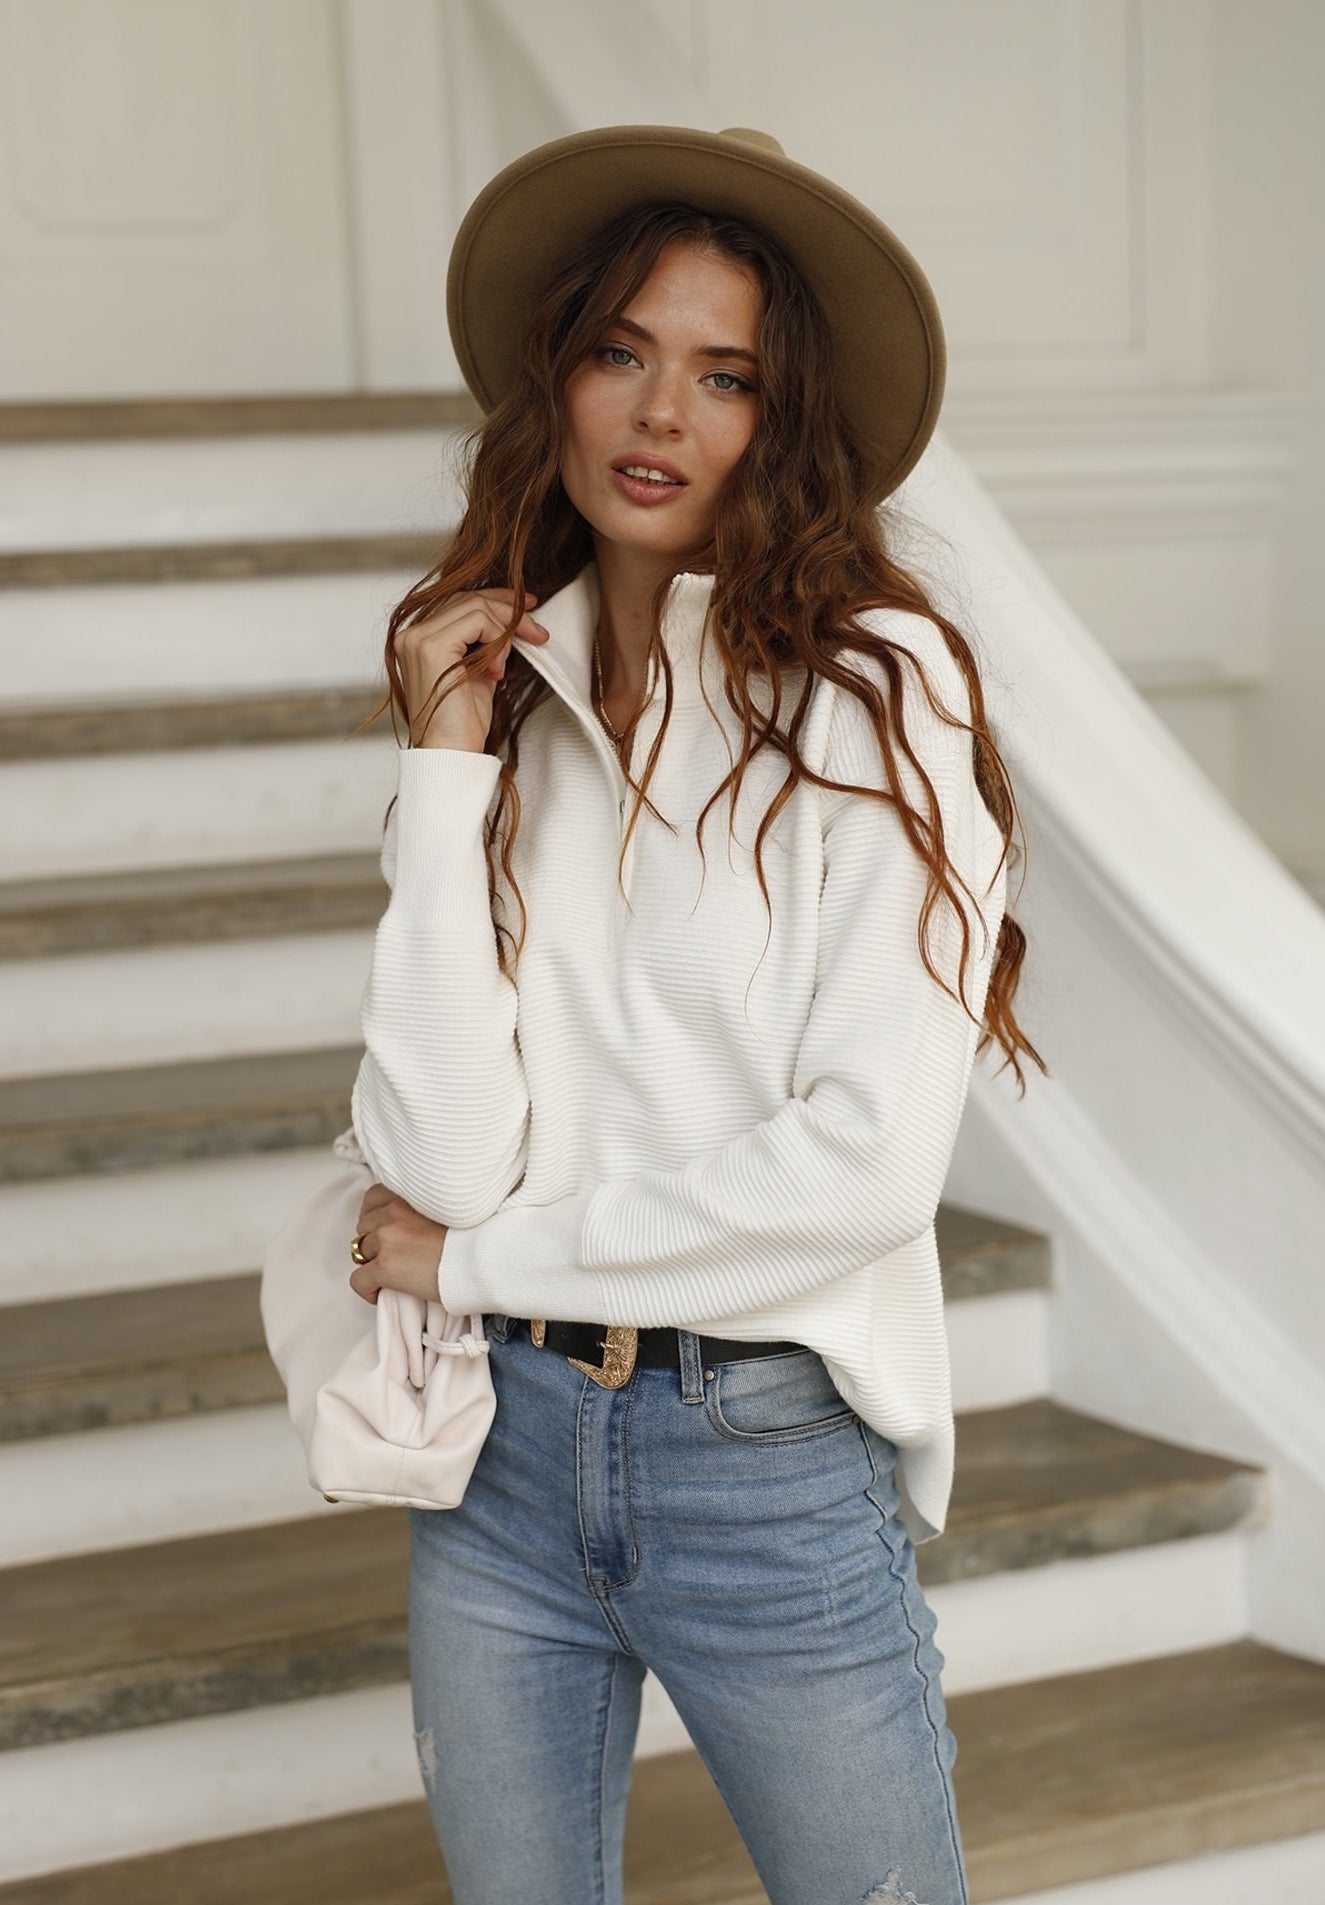 Image of model wearing white sweater